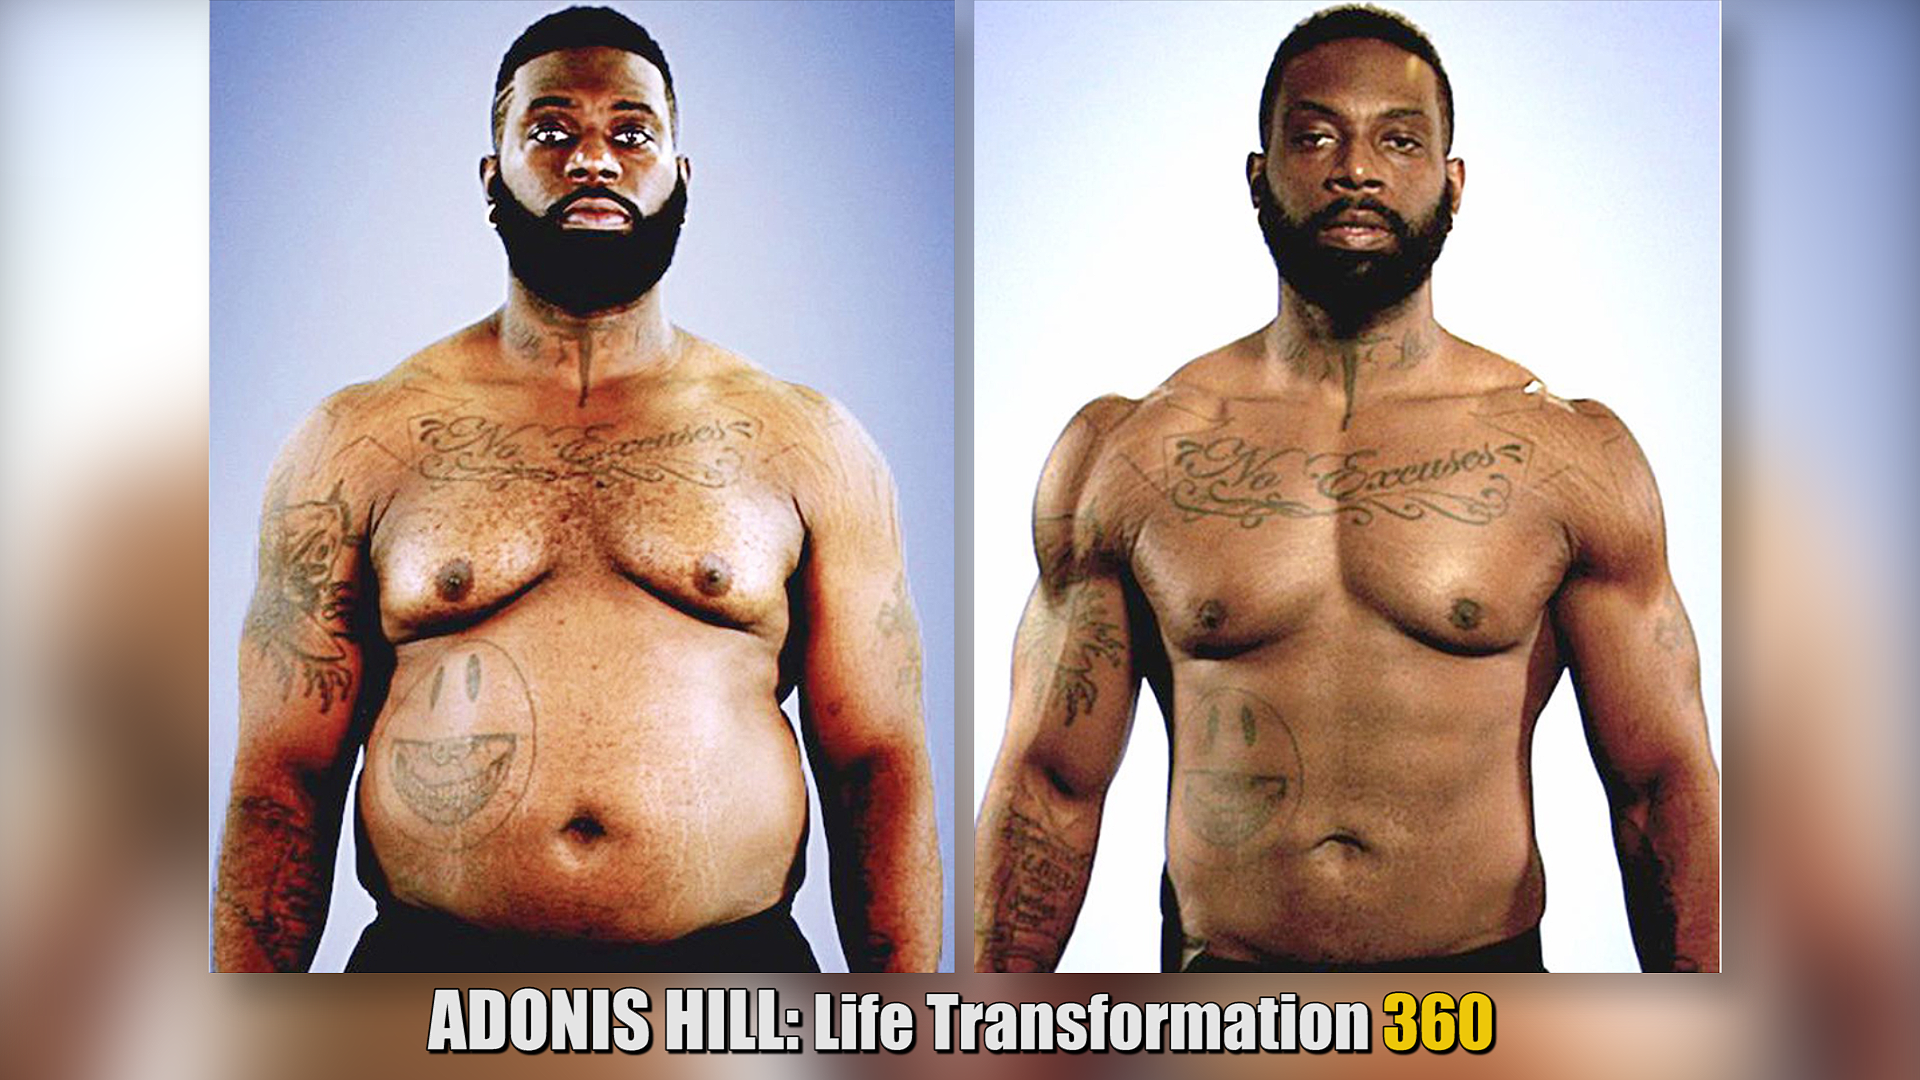 Adonis Hill: Life Transformation 360